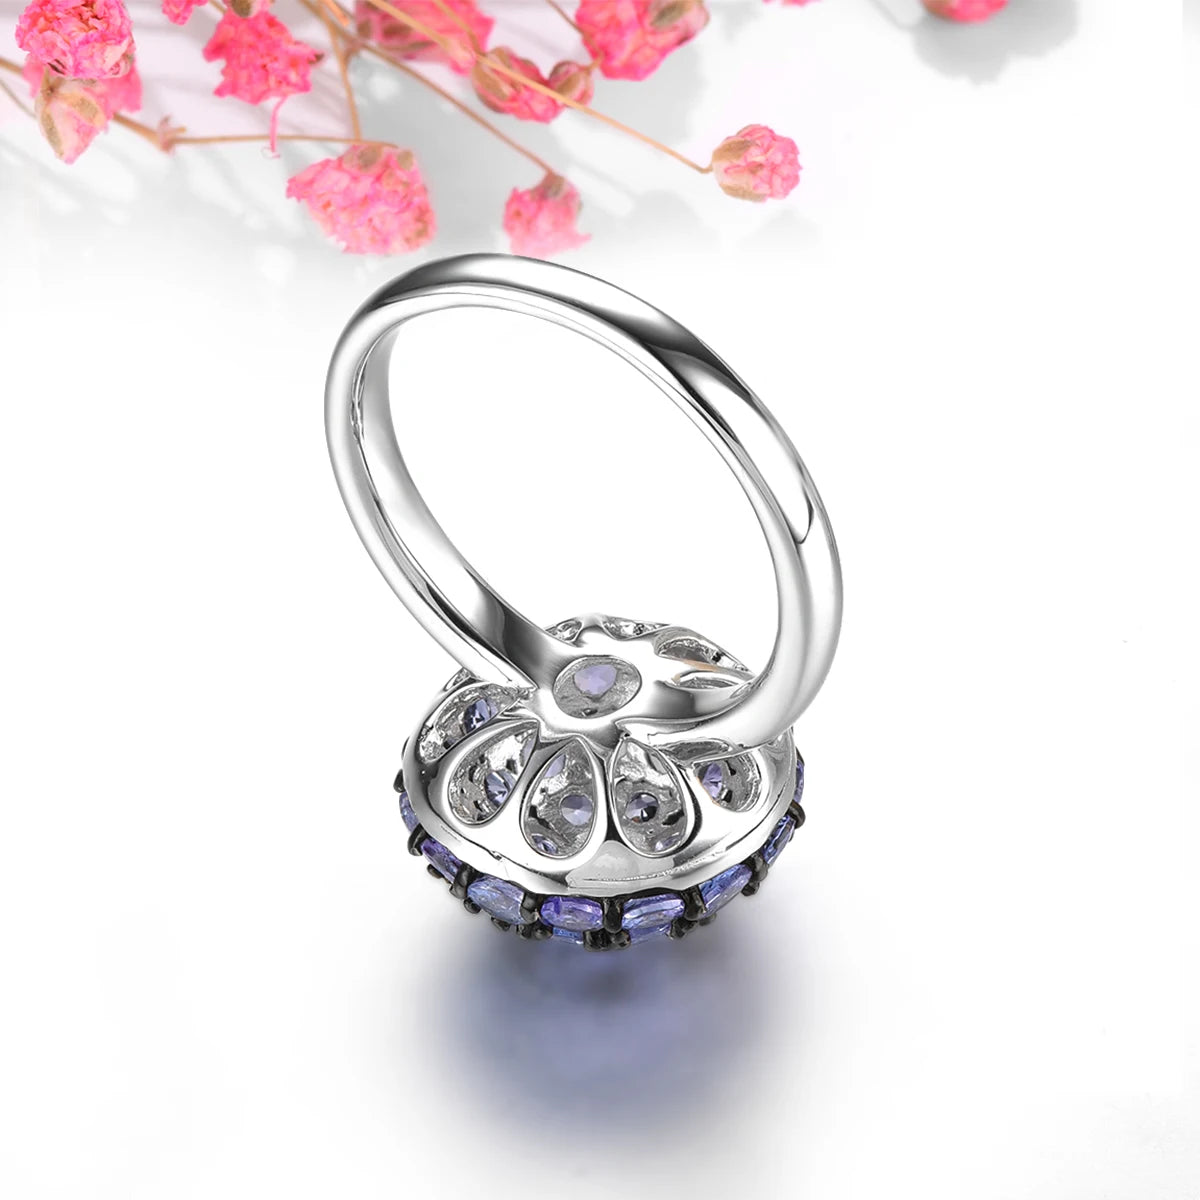 Natural Tanzanite Silver Rings 2.3 Carats Genuine Tanzanite Gemstone Classic S925 Fine Jewelrys Anniversary Birthday Gifts